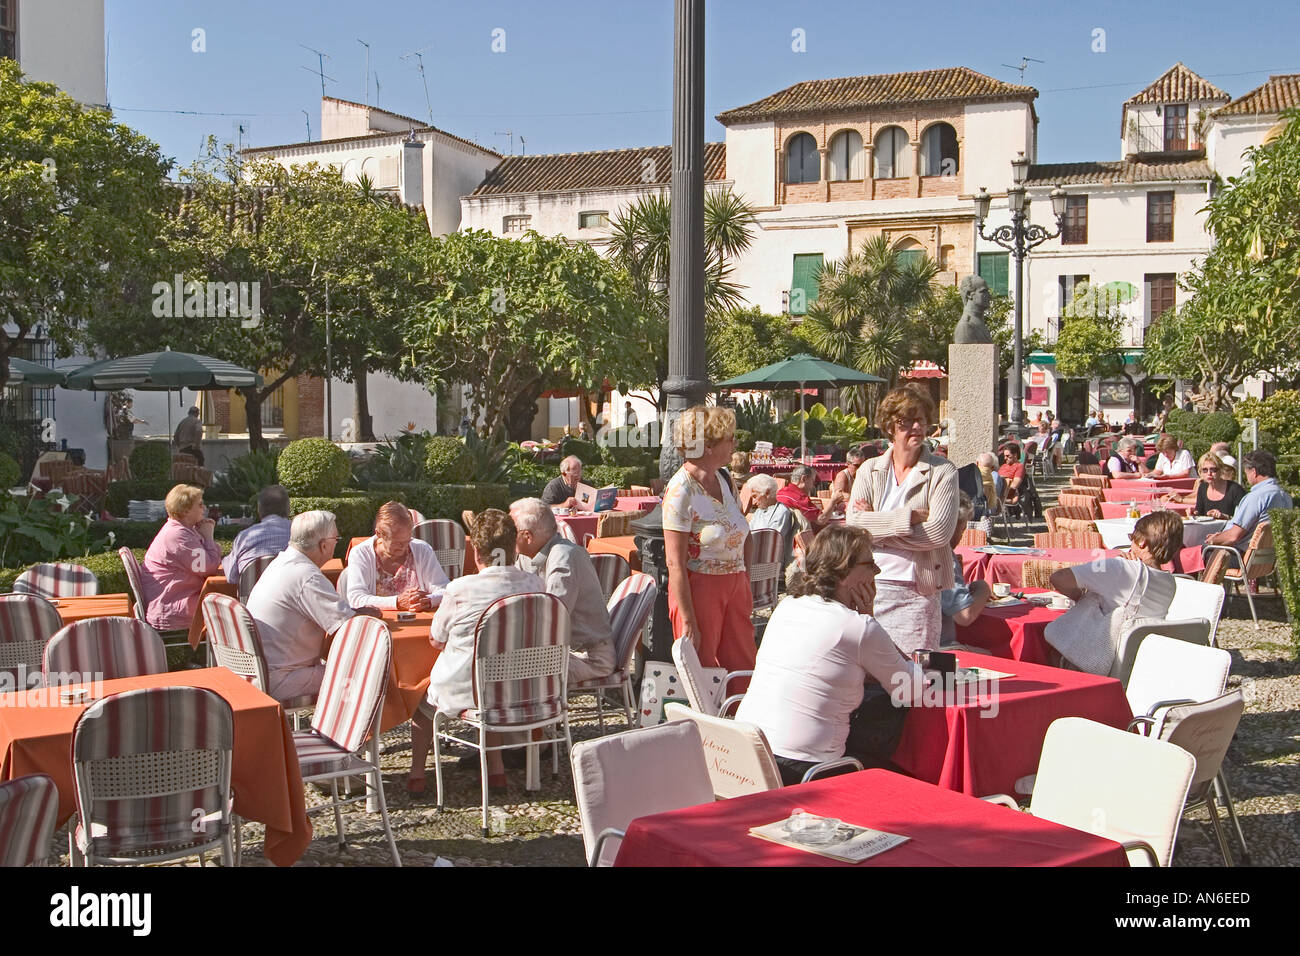 Marbella Costa del Sol Espagne Cafe la vie dans le carré orange Banque D'Images